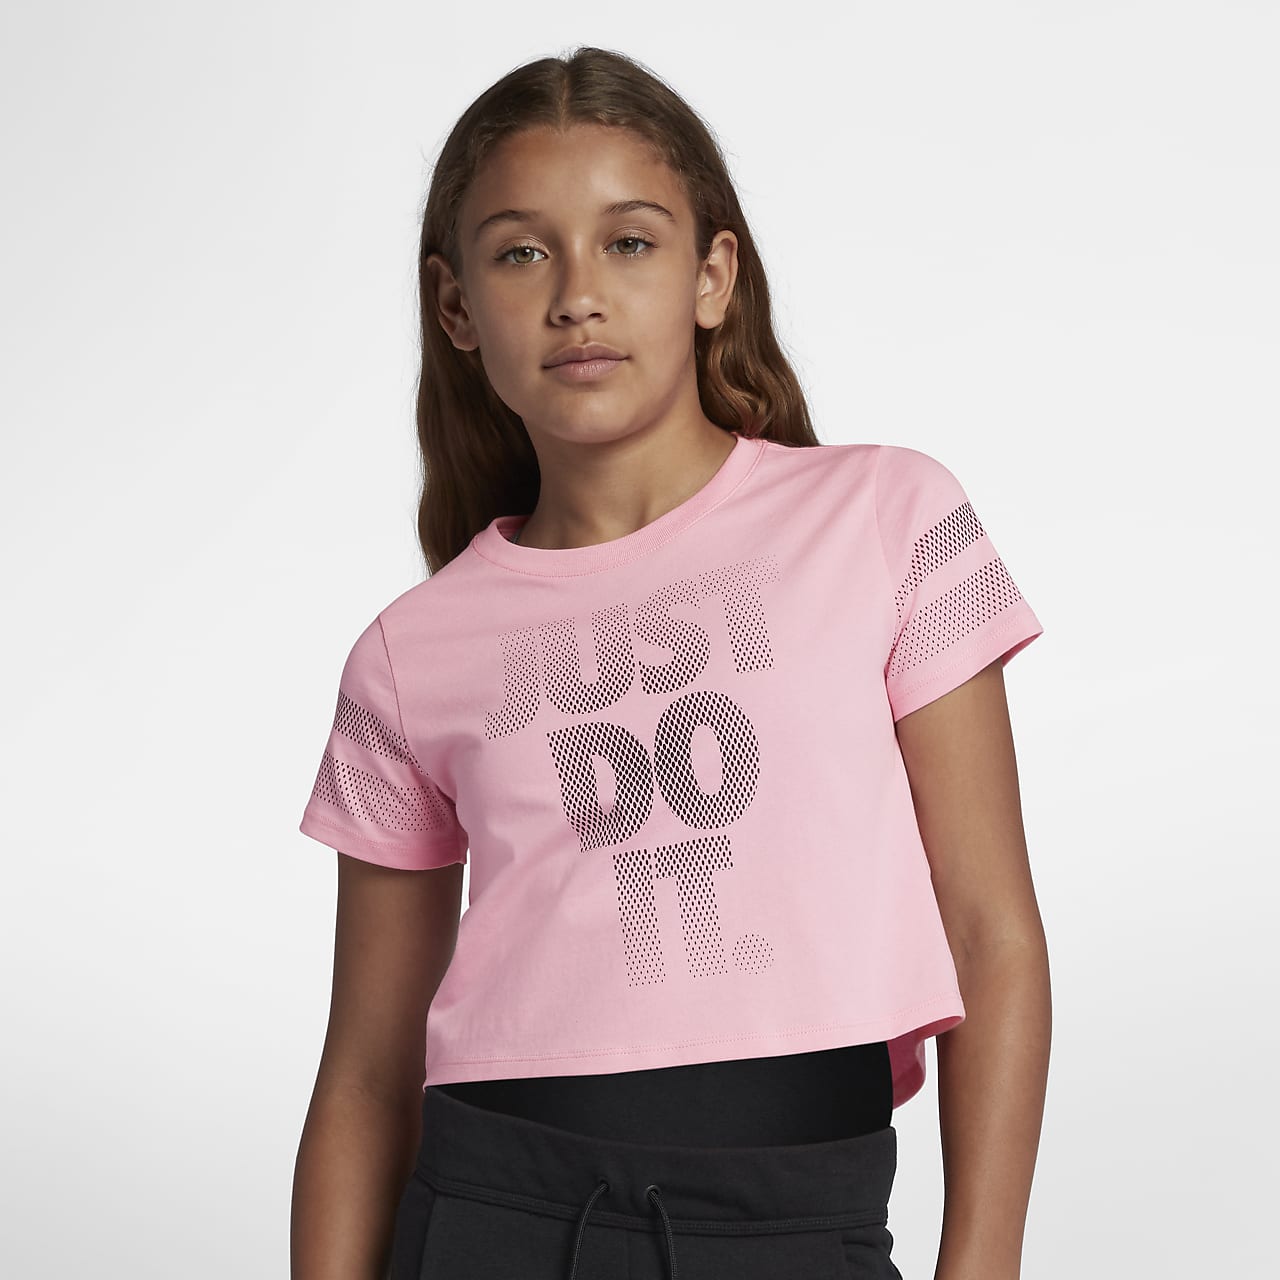 Tee-shirt court Nike Sportswear pour Fille plus âgée